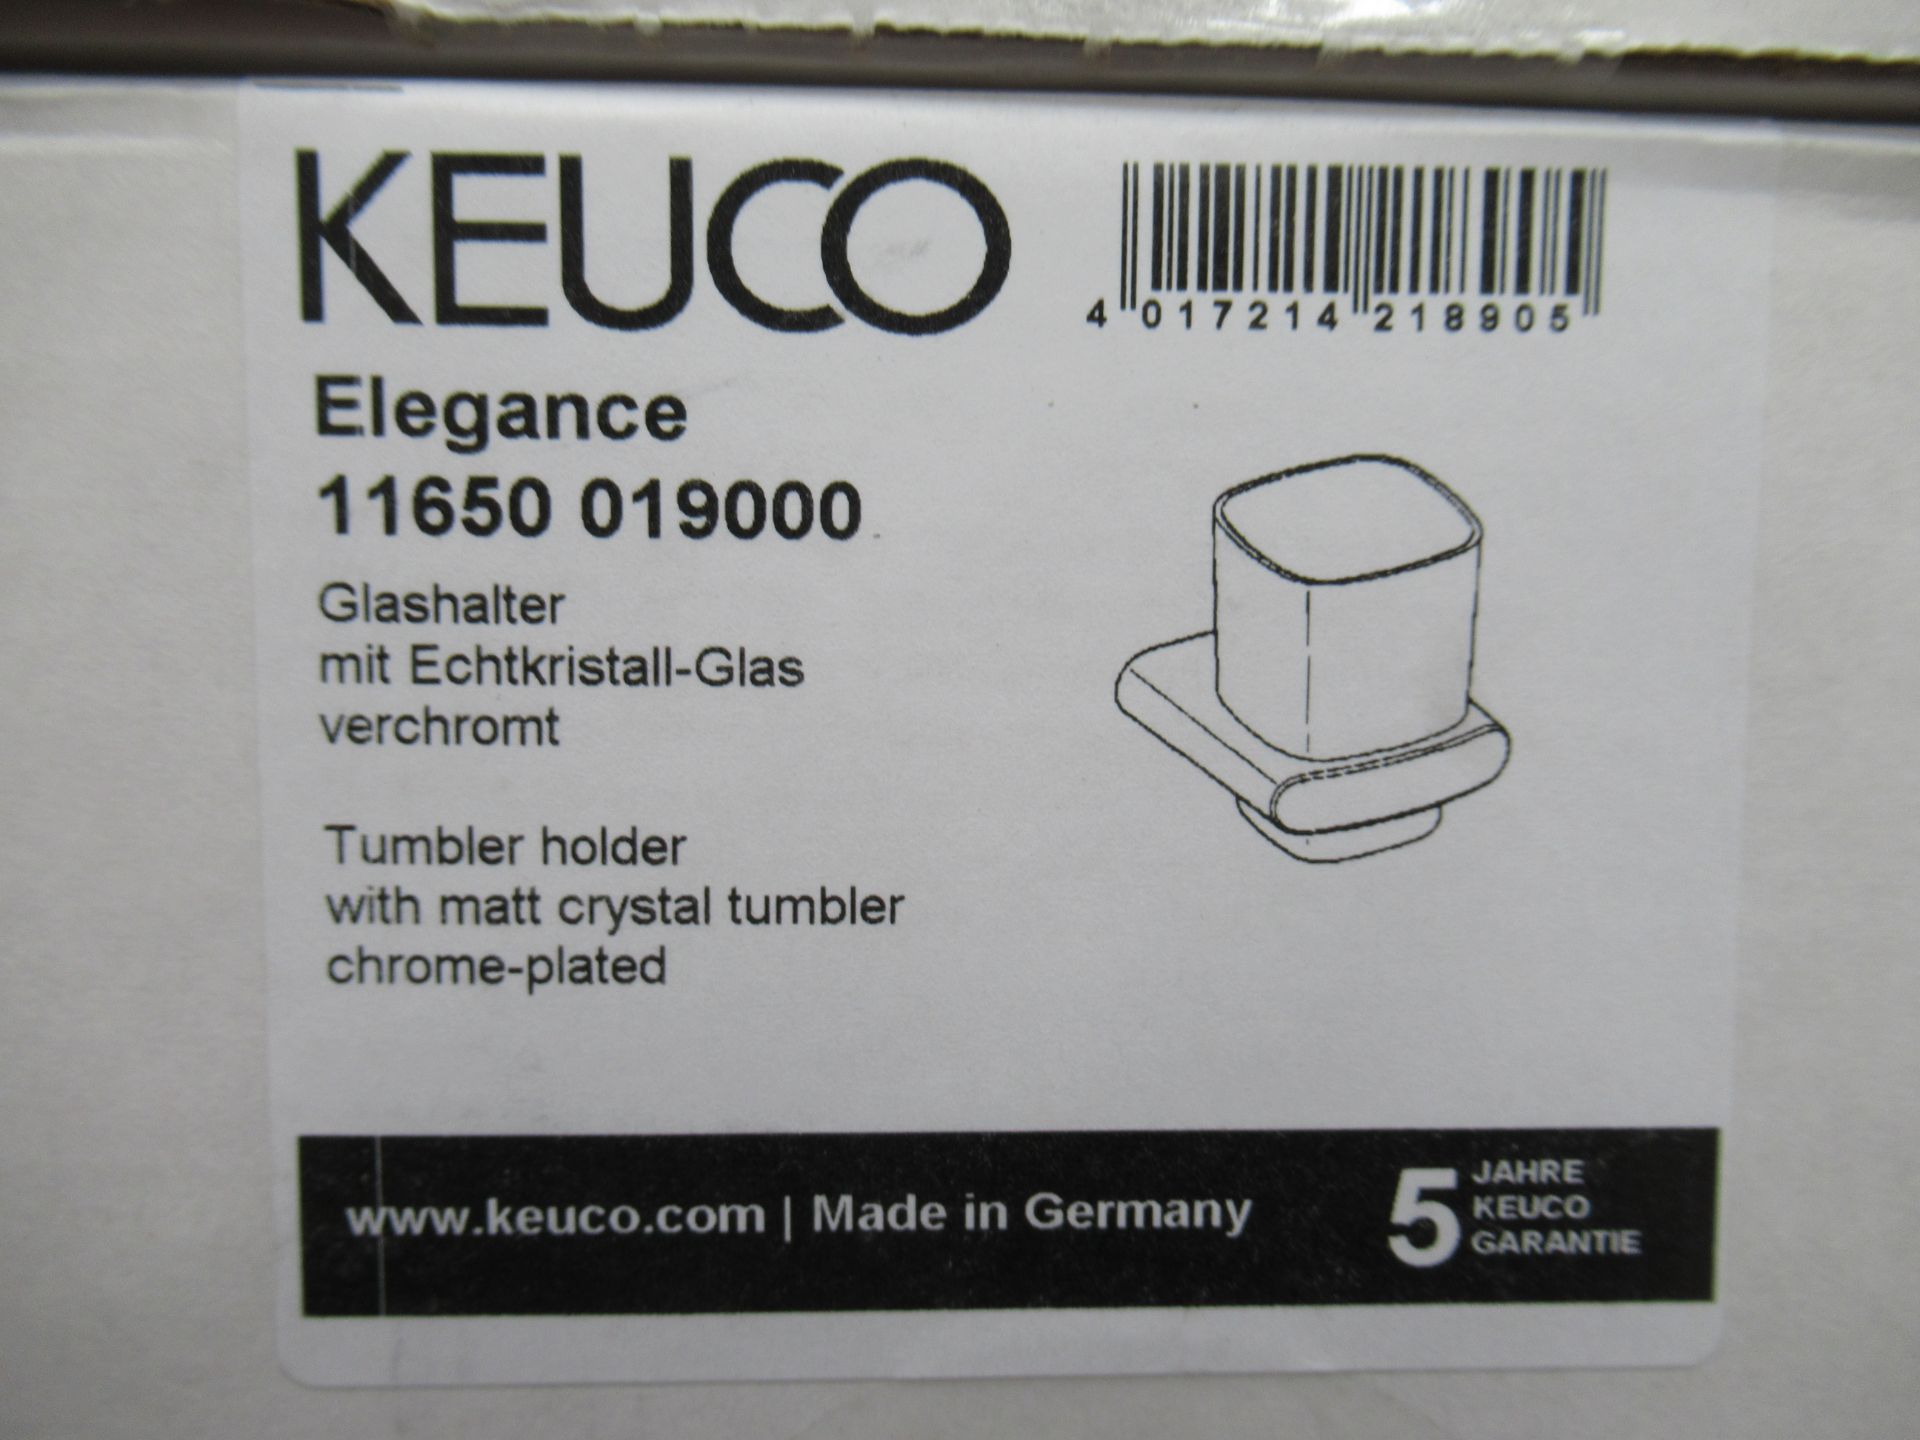 3 x Keuco Elegance Tumbler Holders Chrome Plated, P/N 11650-019000 - Image 2 of 2